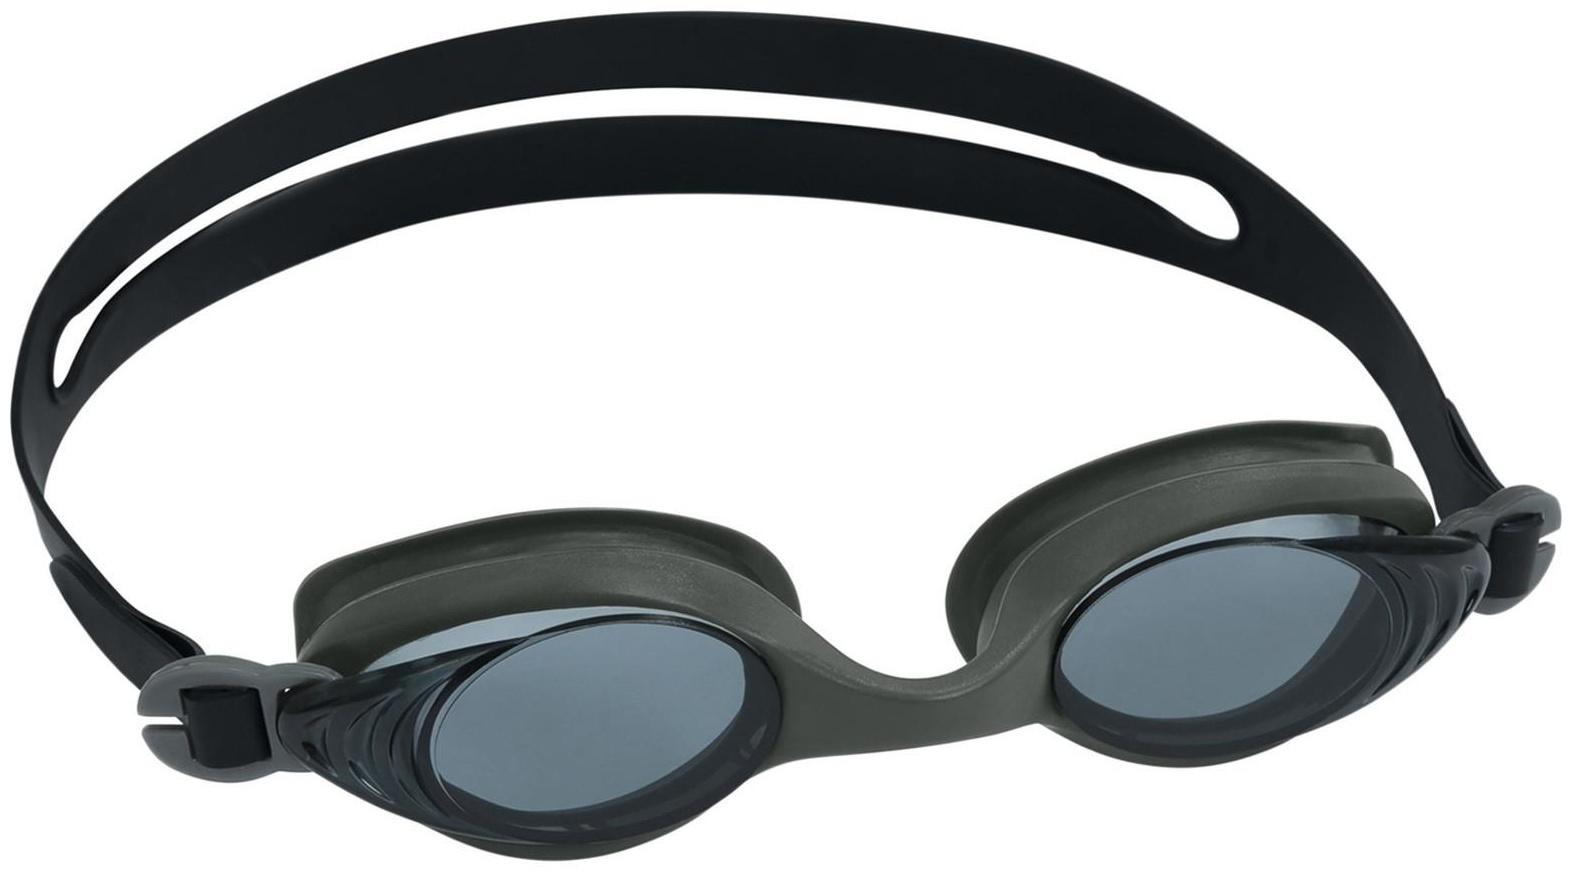 Очки для плавания Lightning Pro Goggles, от 14 лет, цвета микс 21130